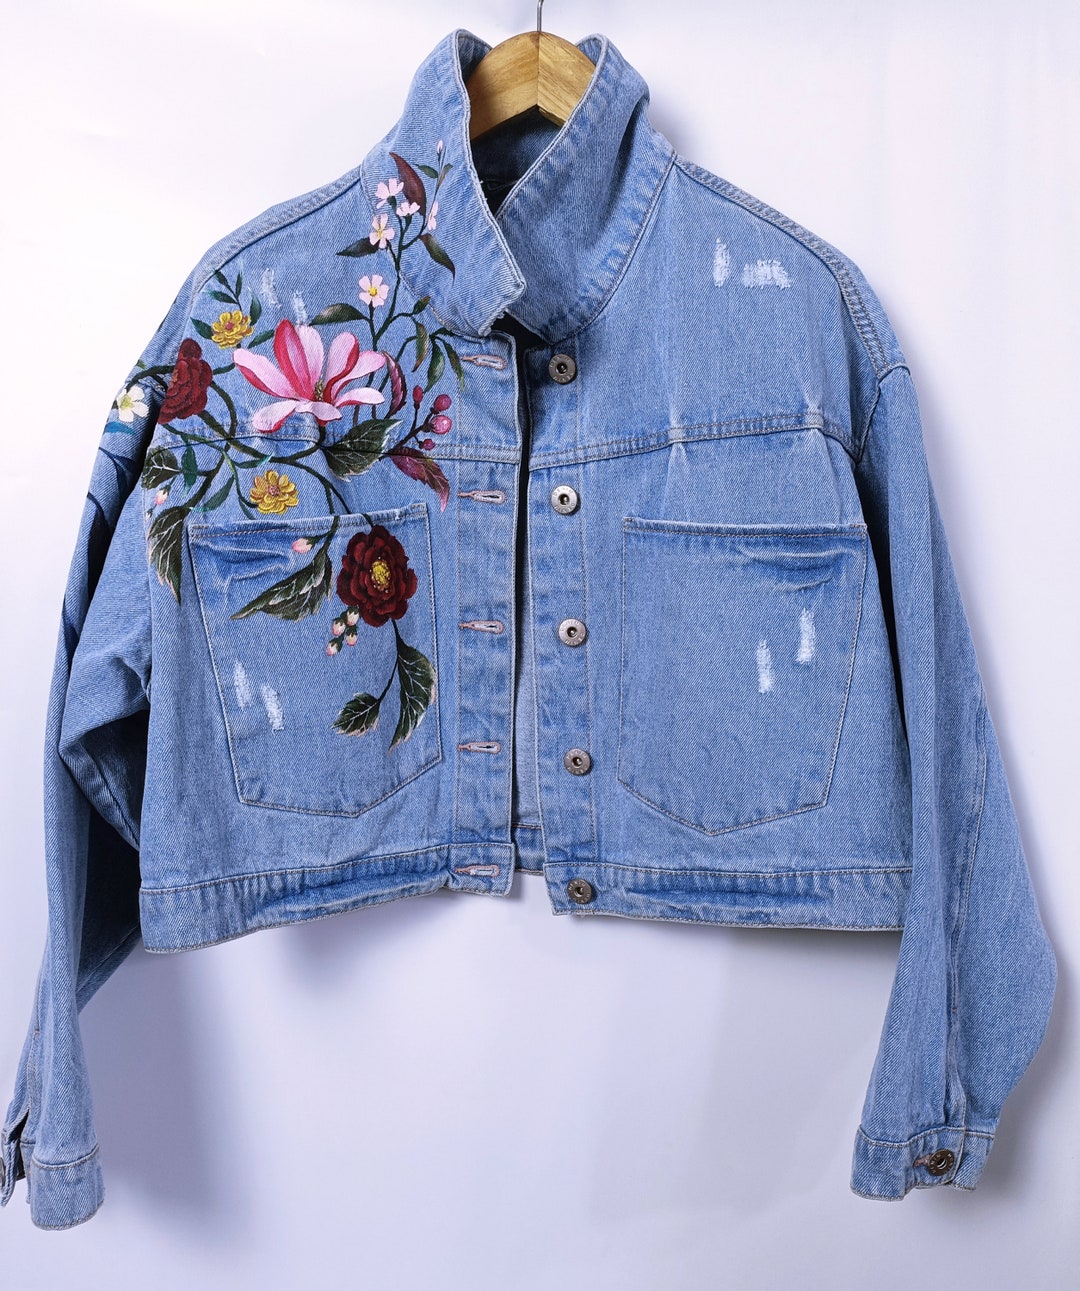 Painted Jeans Crop Top Jacket Floral Floral Painting Painted Denim - Etsy